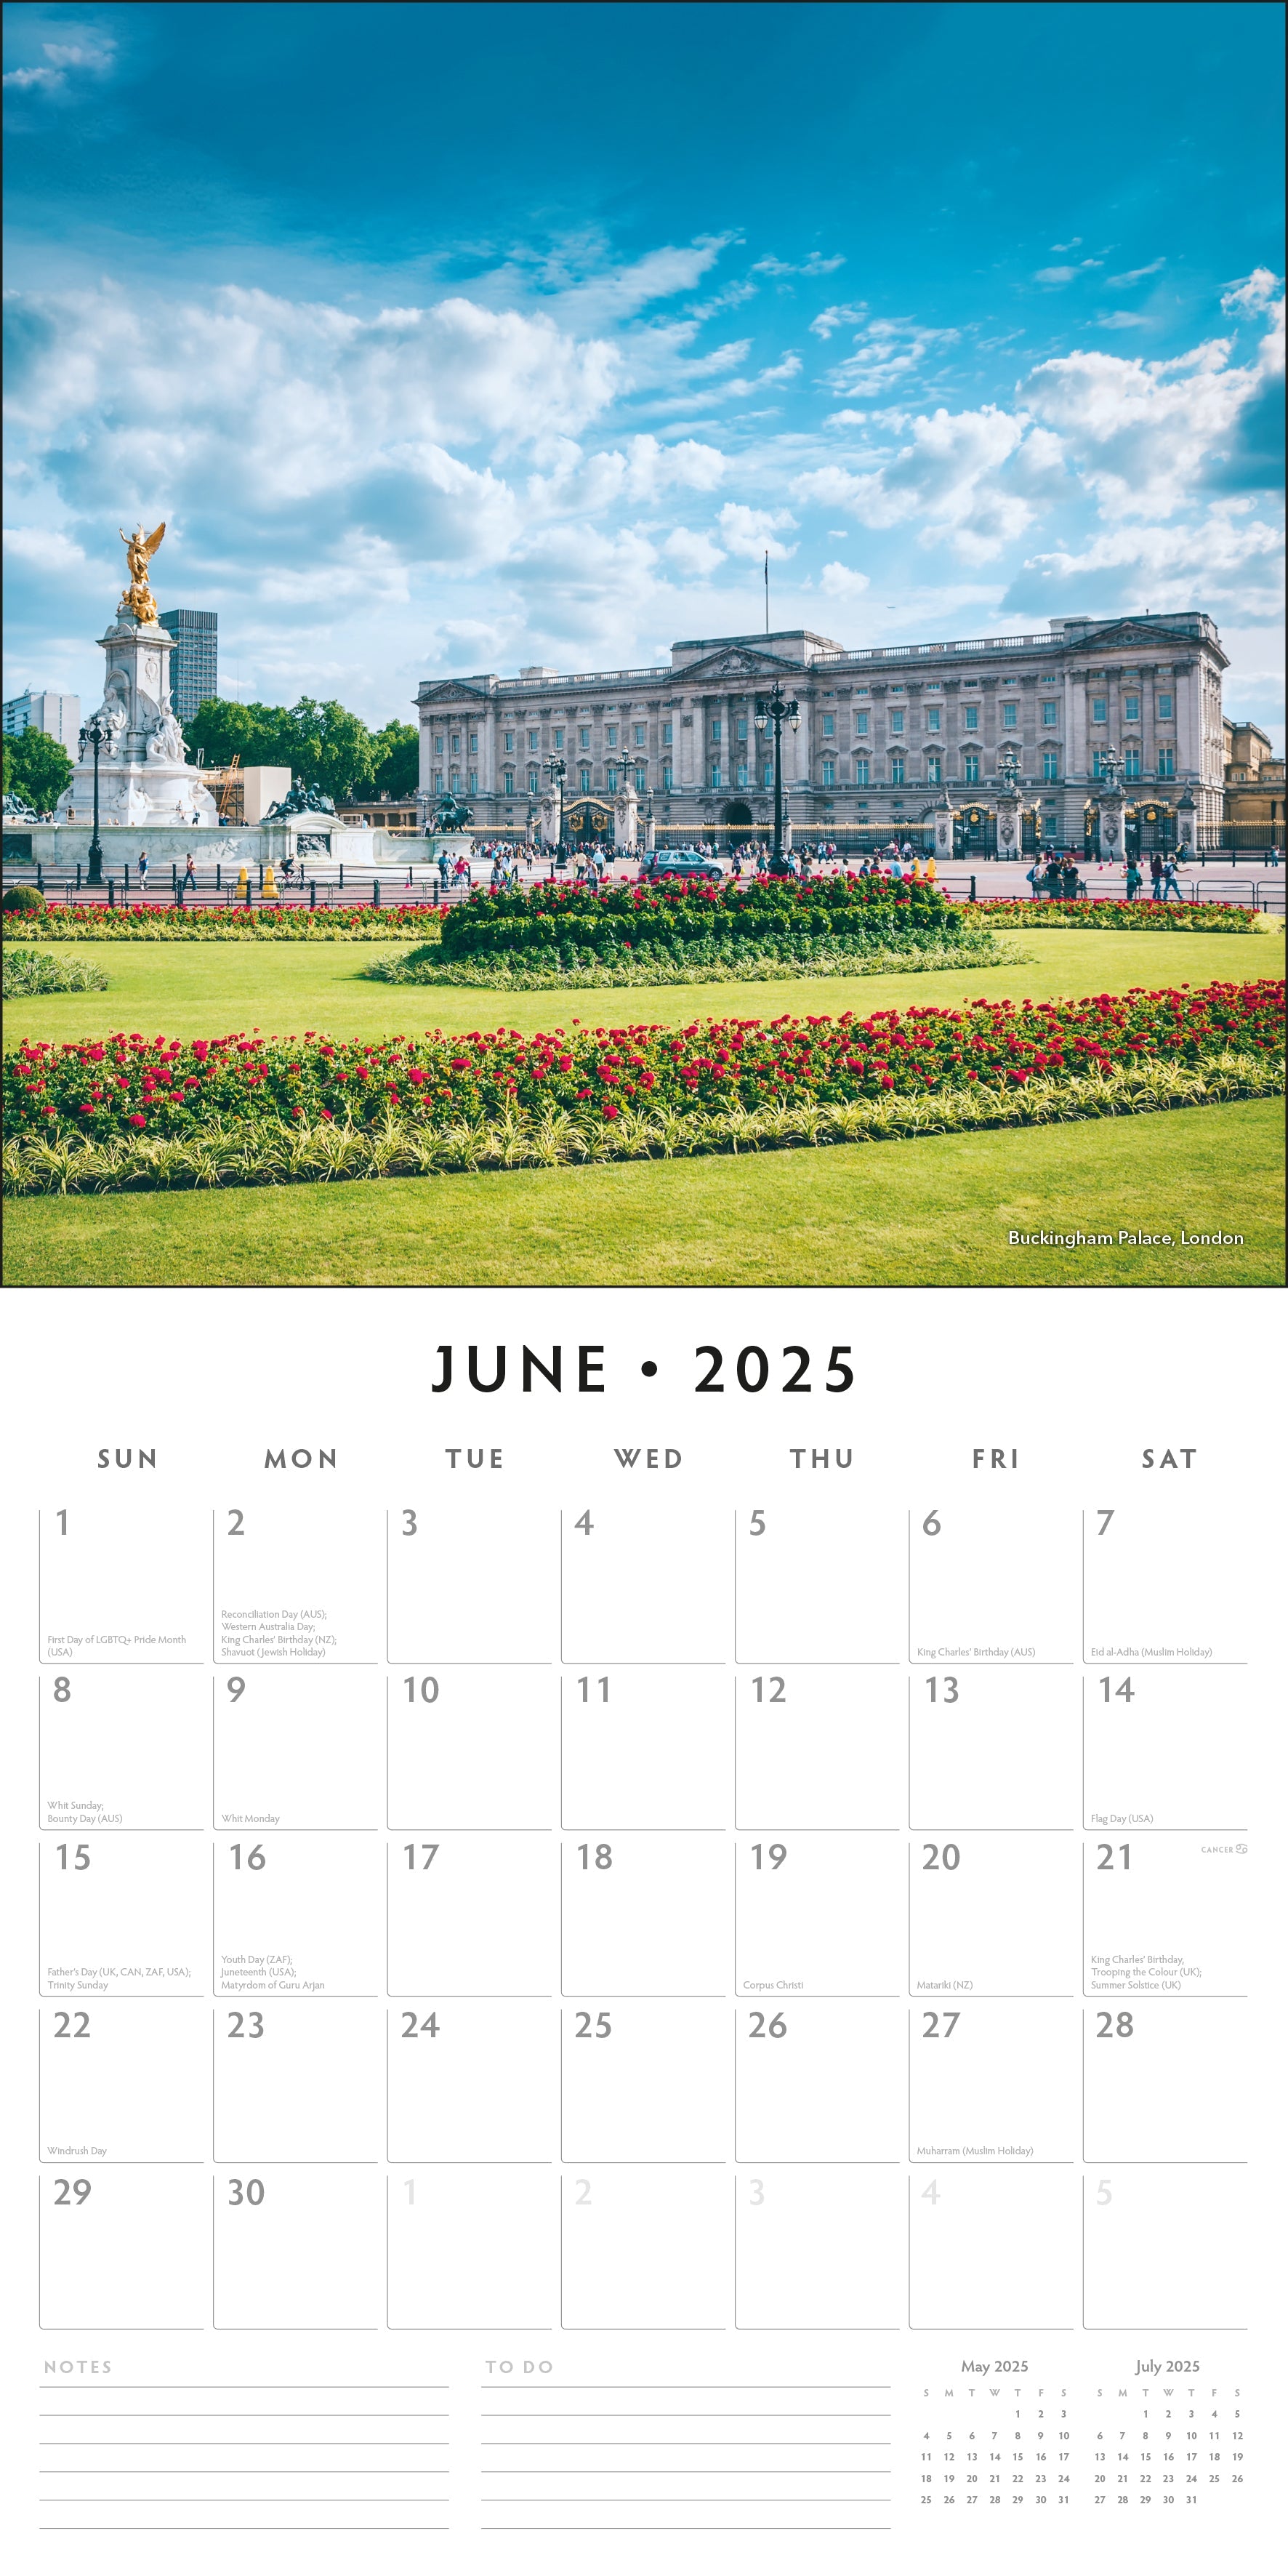 2025 Landmarks of Britain - Square Wall Calendar